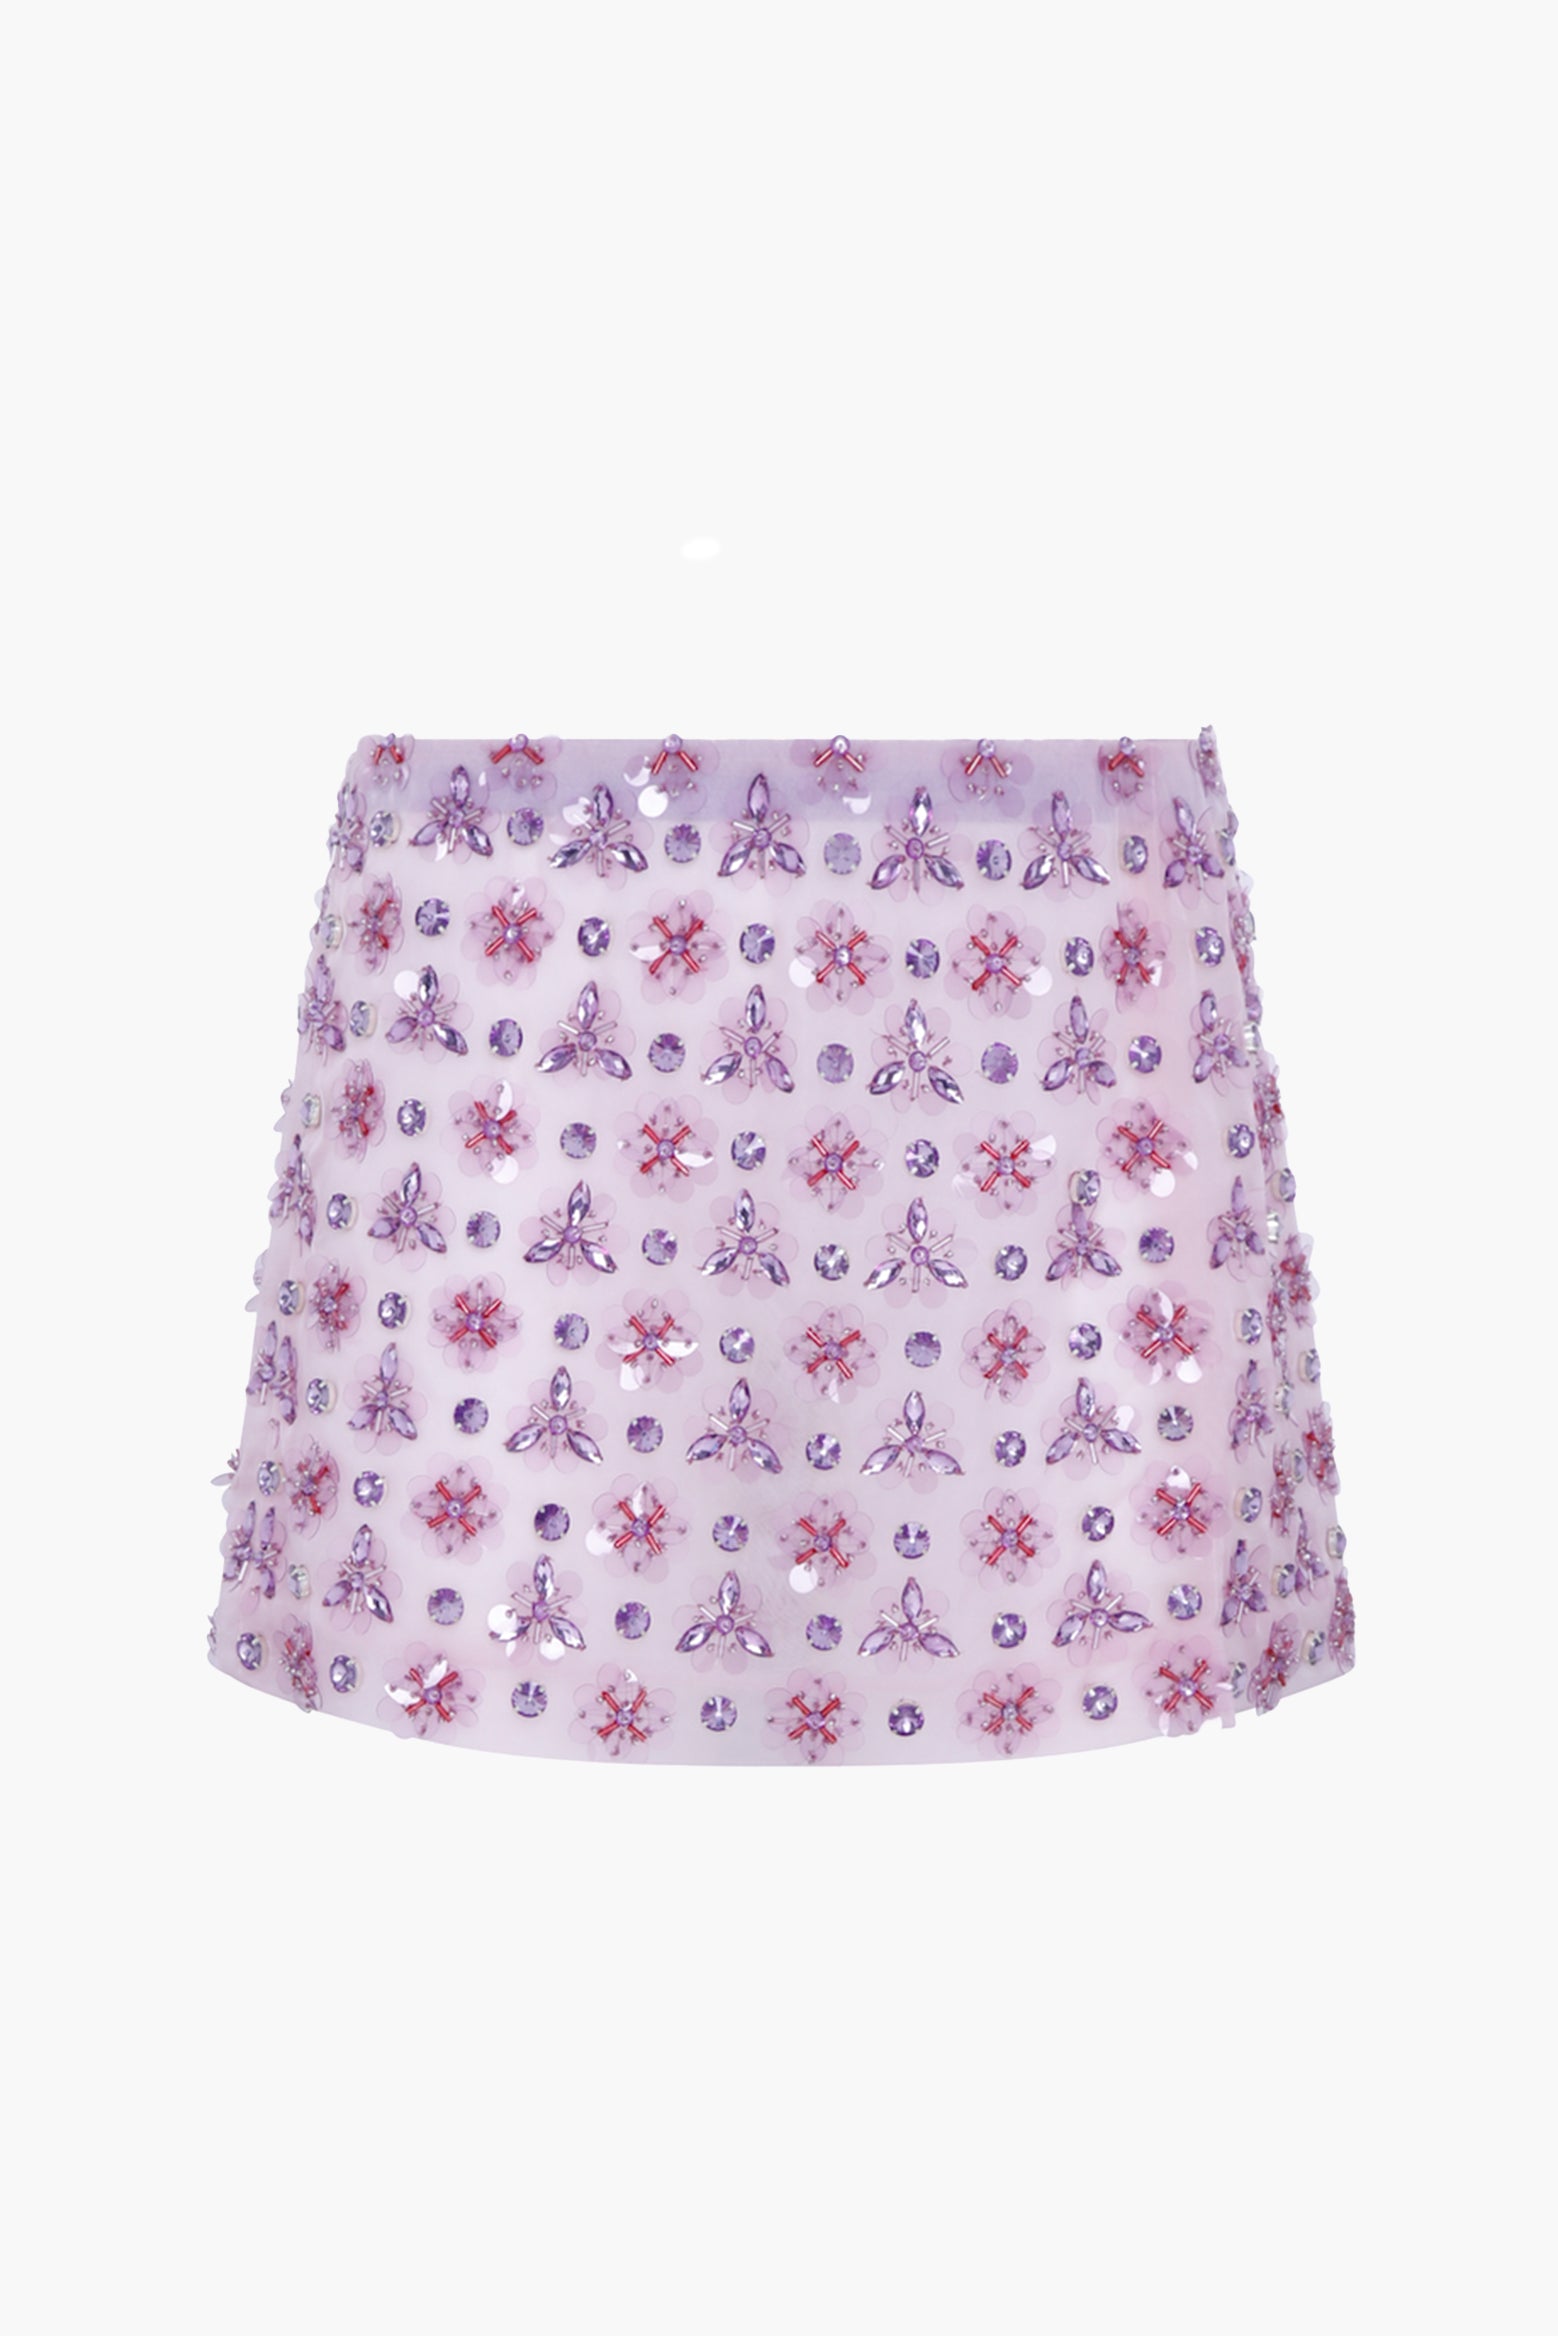 Des Phemmes Geometric Mini Skirt in Lavander available at The New Trend Australia. 